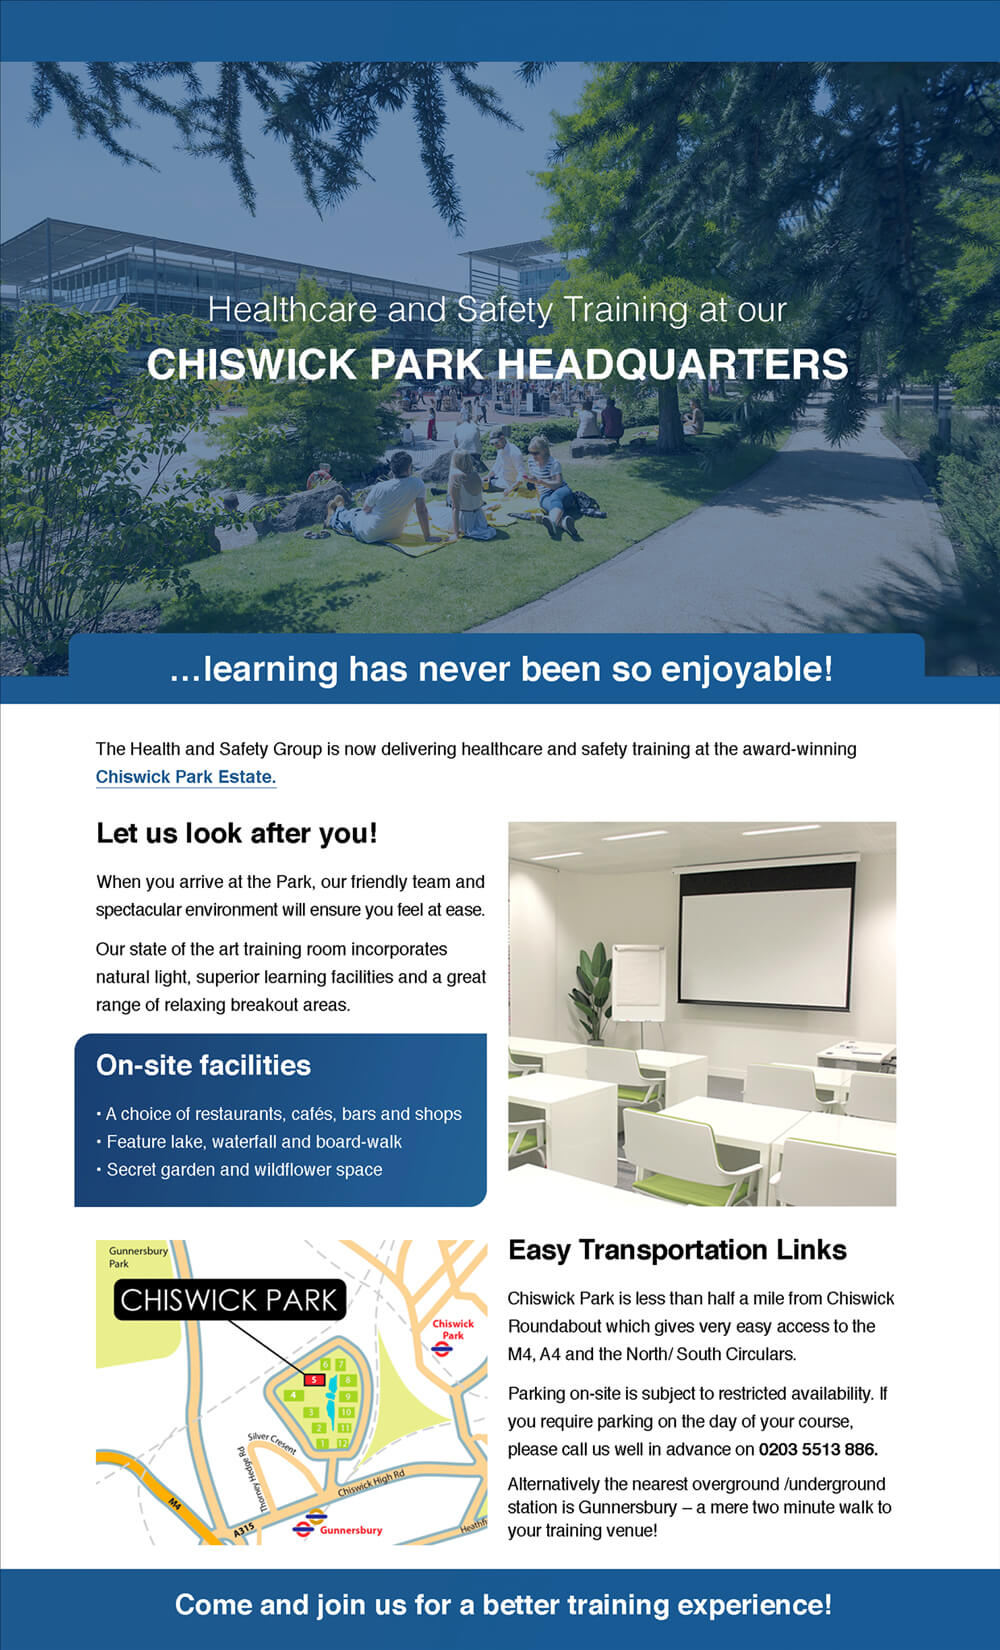 Chiswick Park Headquarter